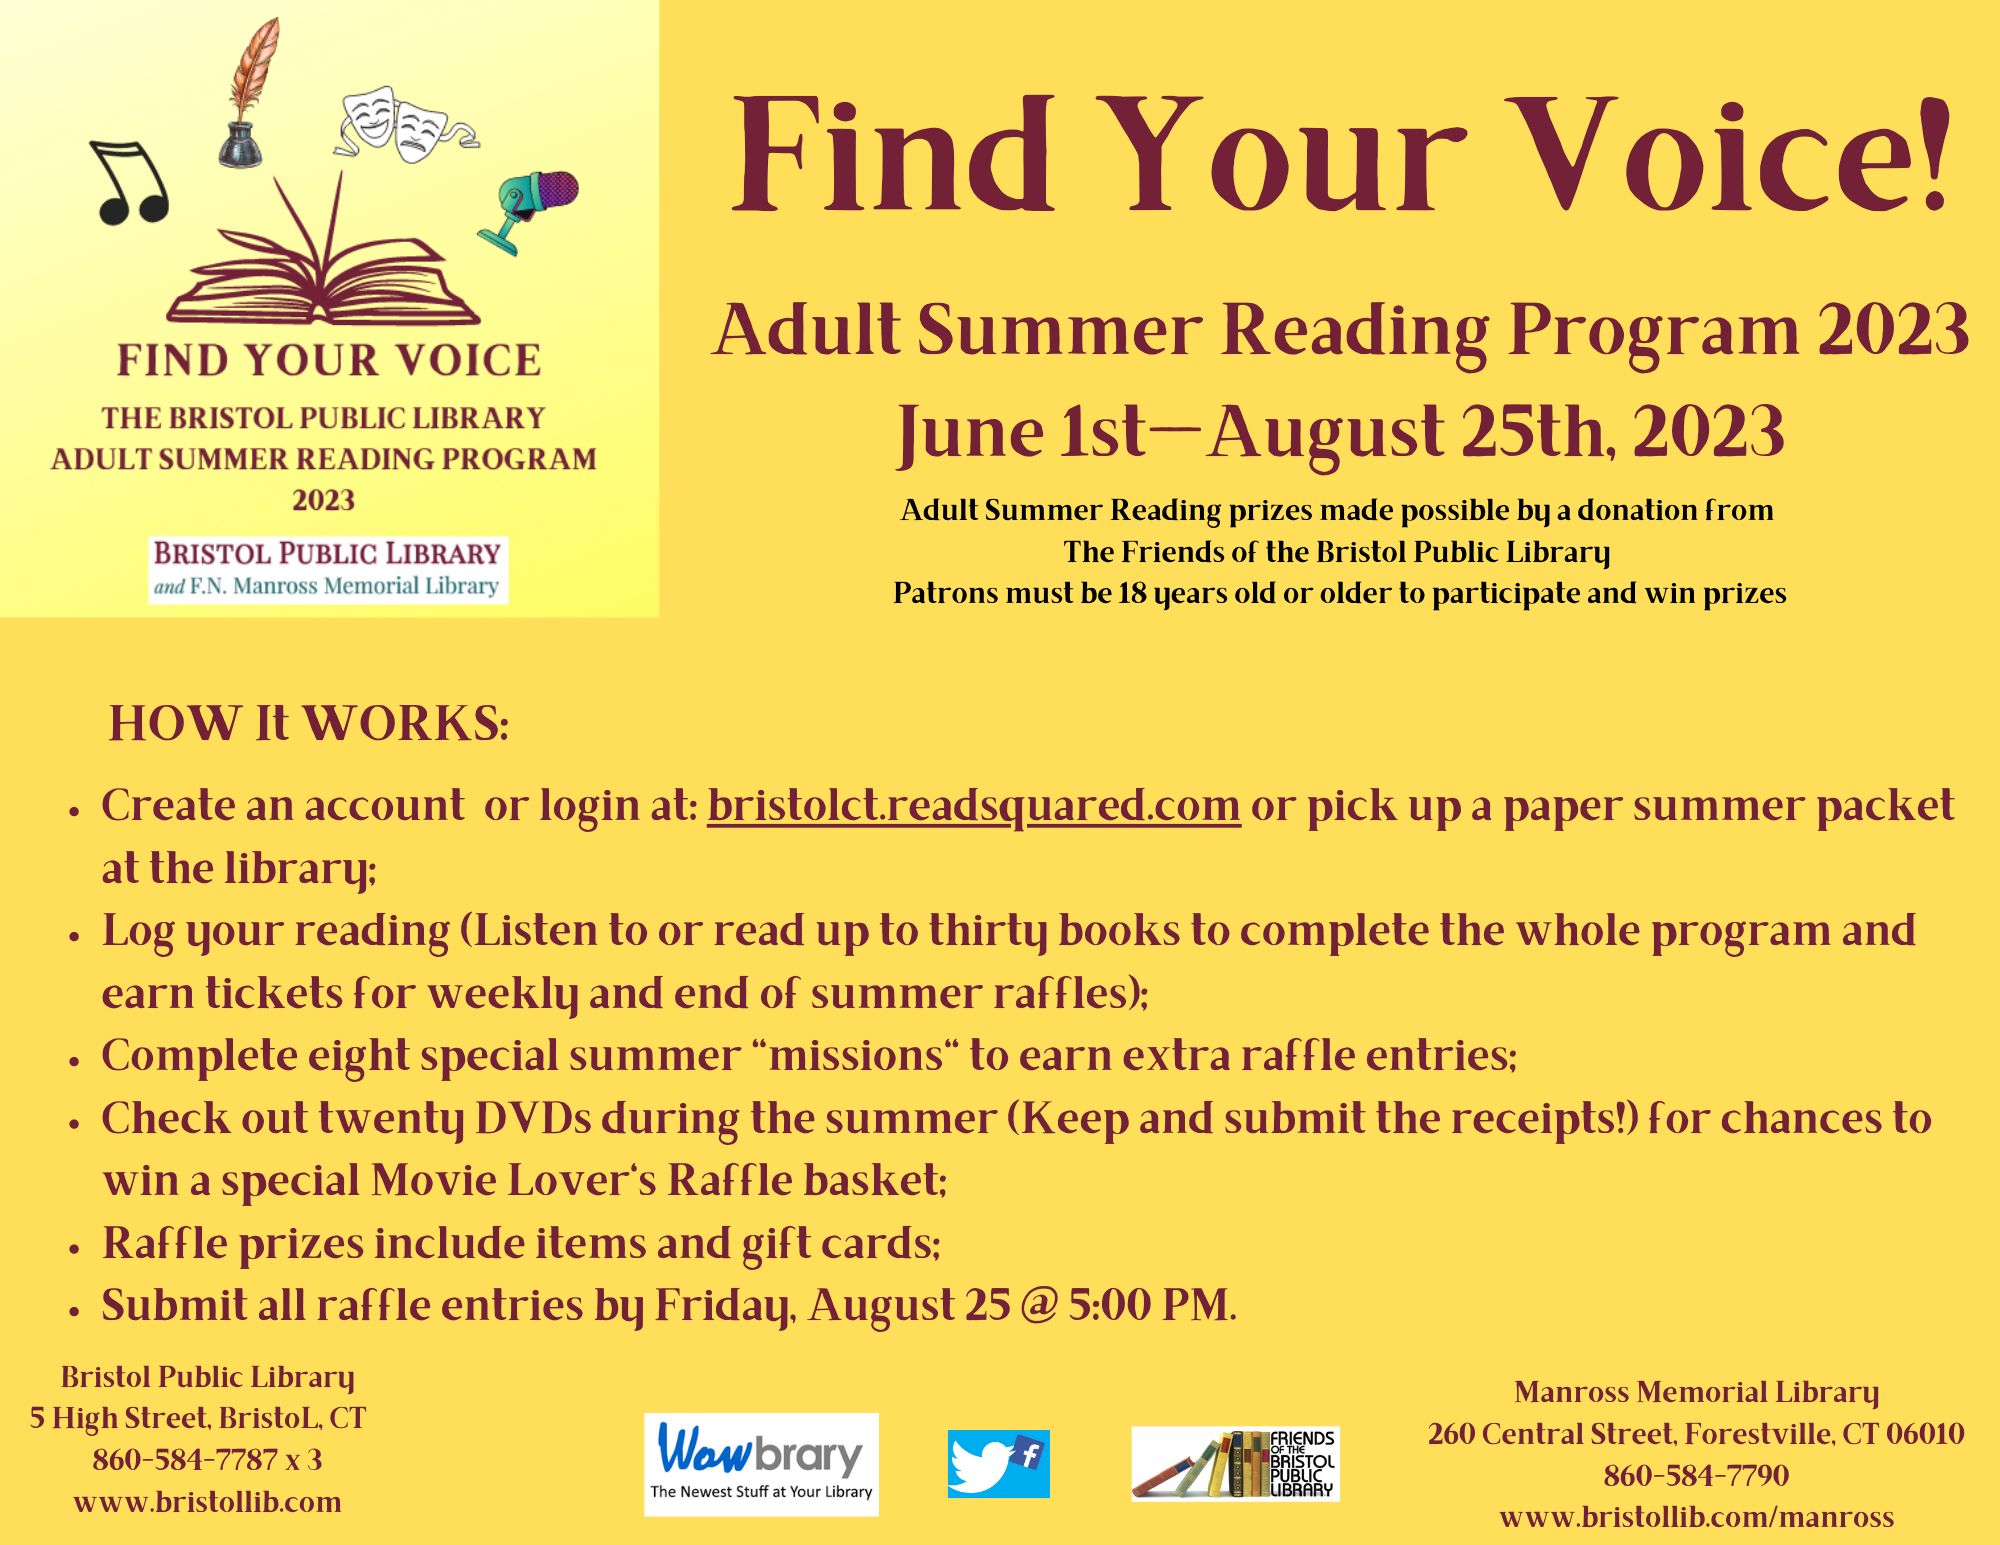 Adult Summer Reading Program 2023 Ends Bristol Public Library 